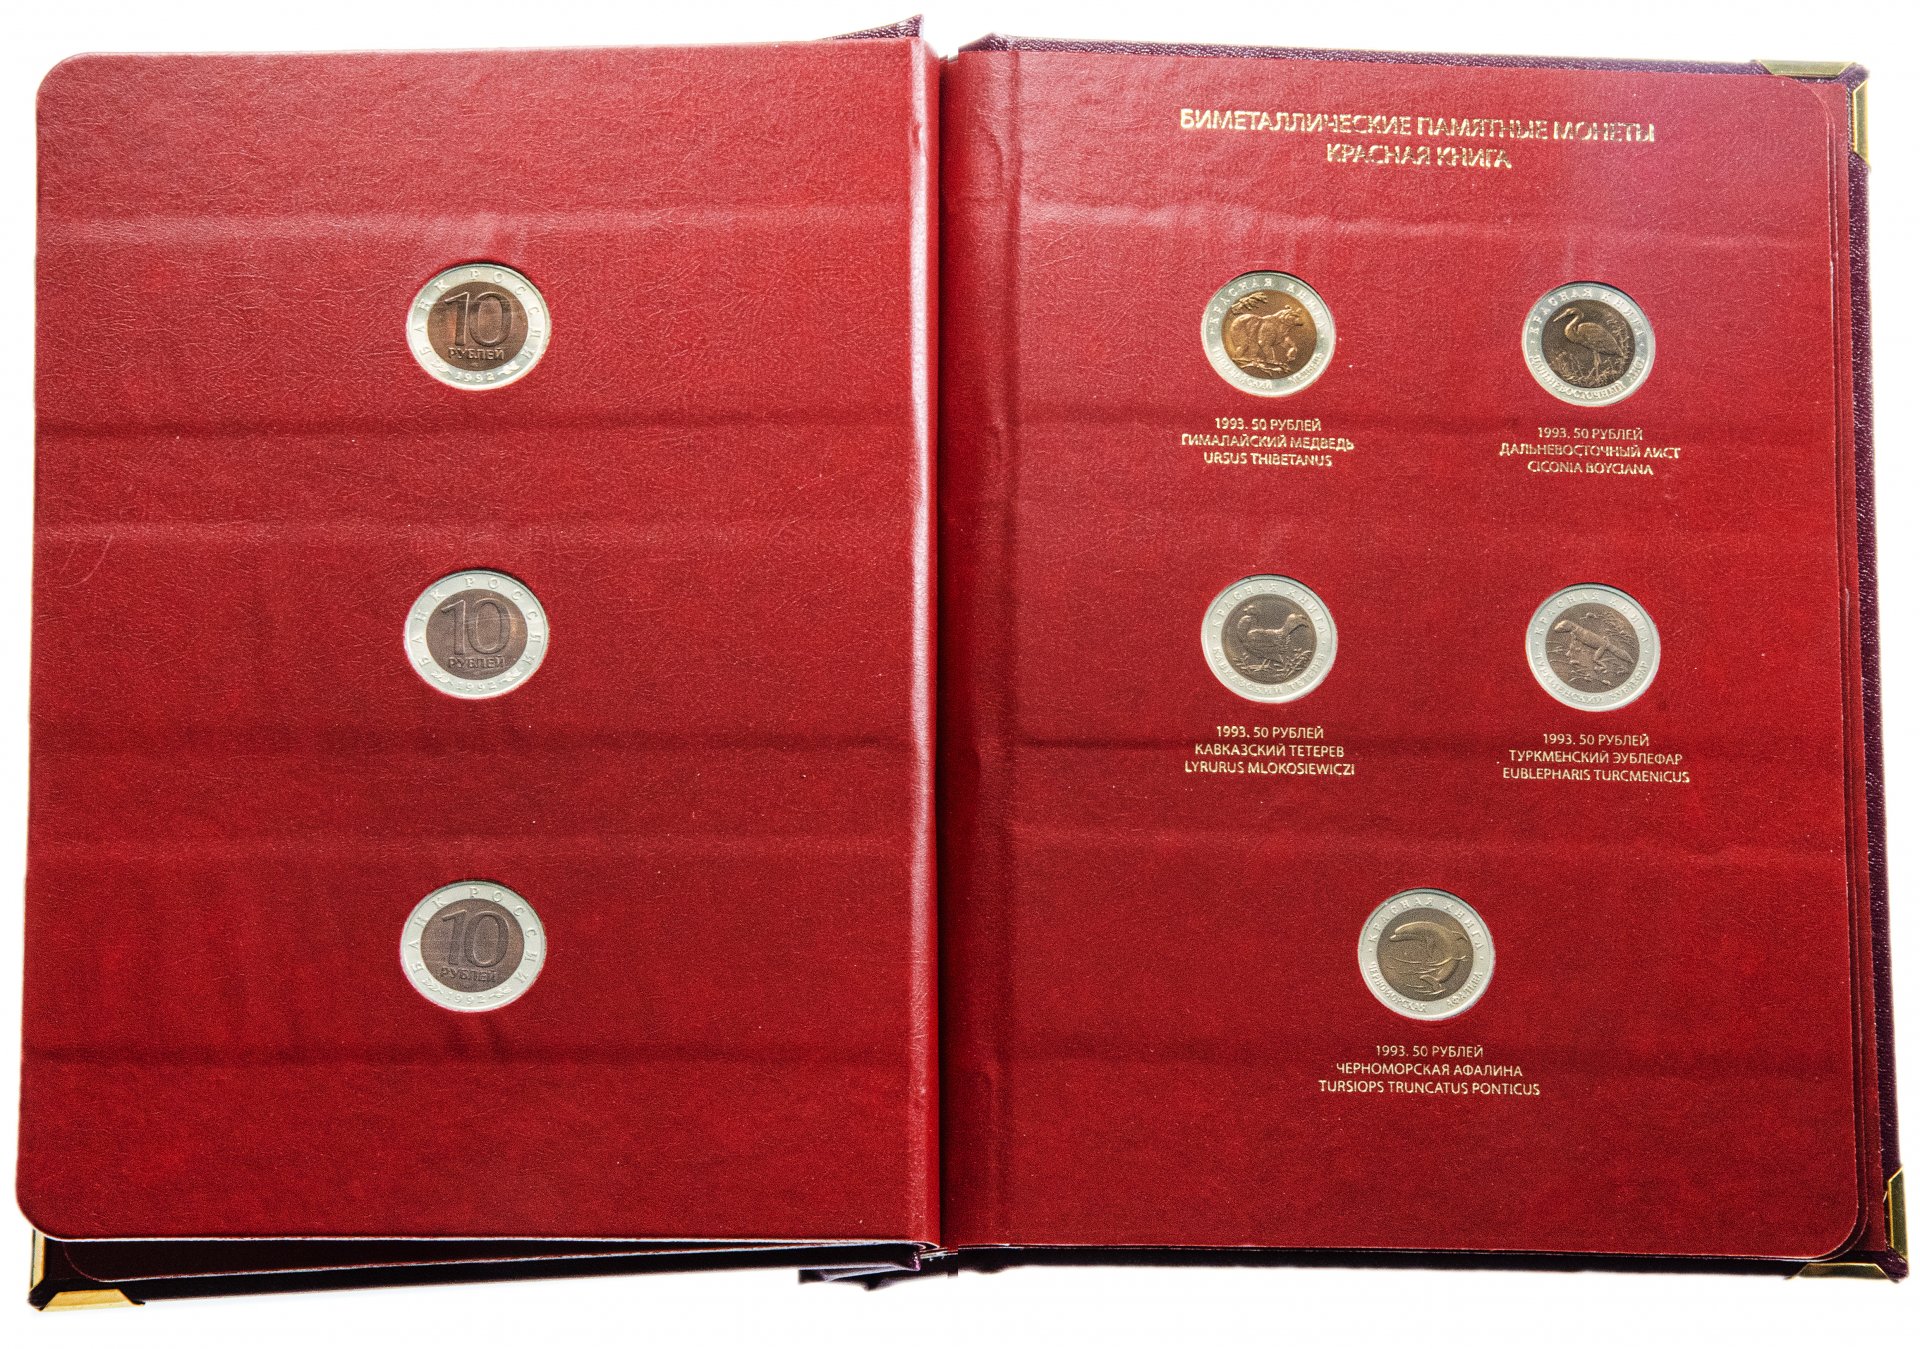 Красная книга 1991 1994. Набор монет красная книга 1991-1994. Полный набор монет красная книга. Набор монет красная книга. Красная книга серебро набор.